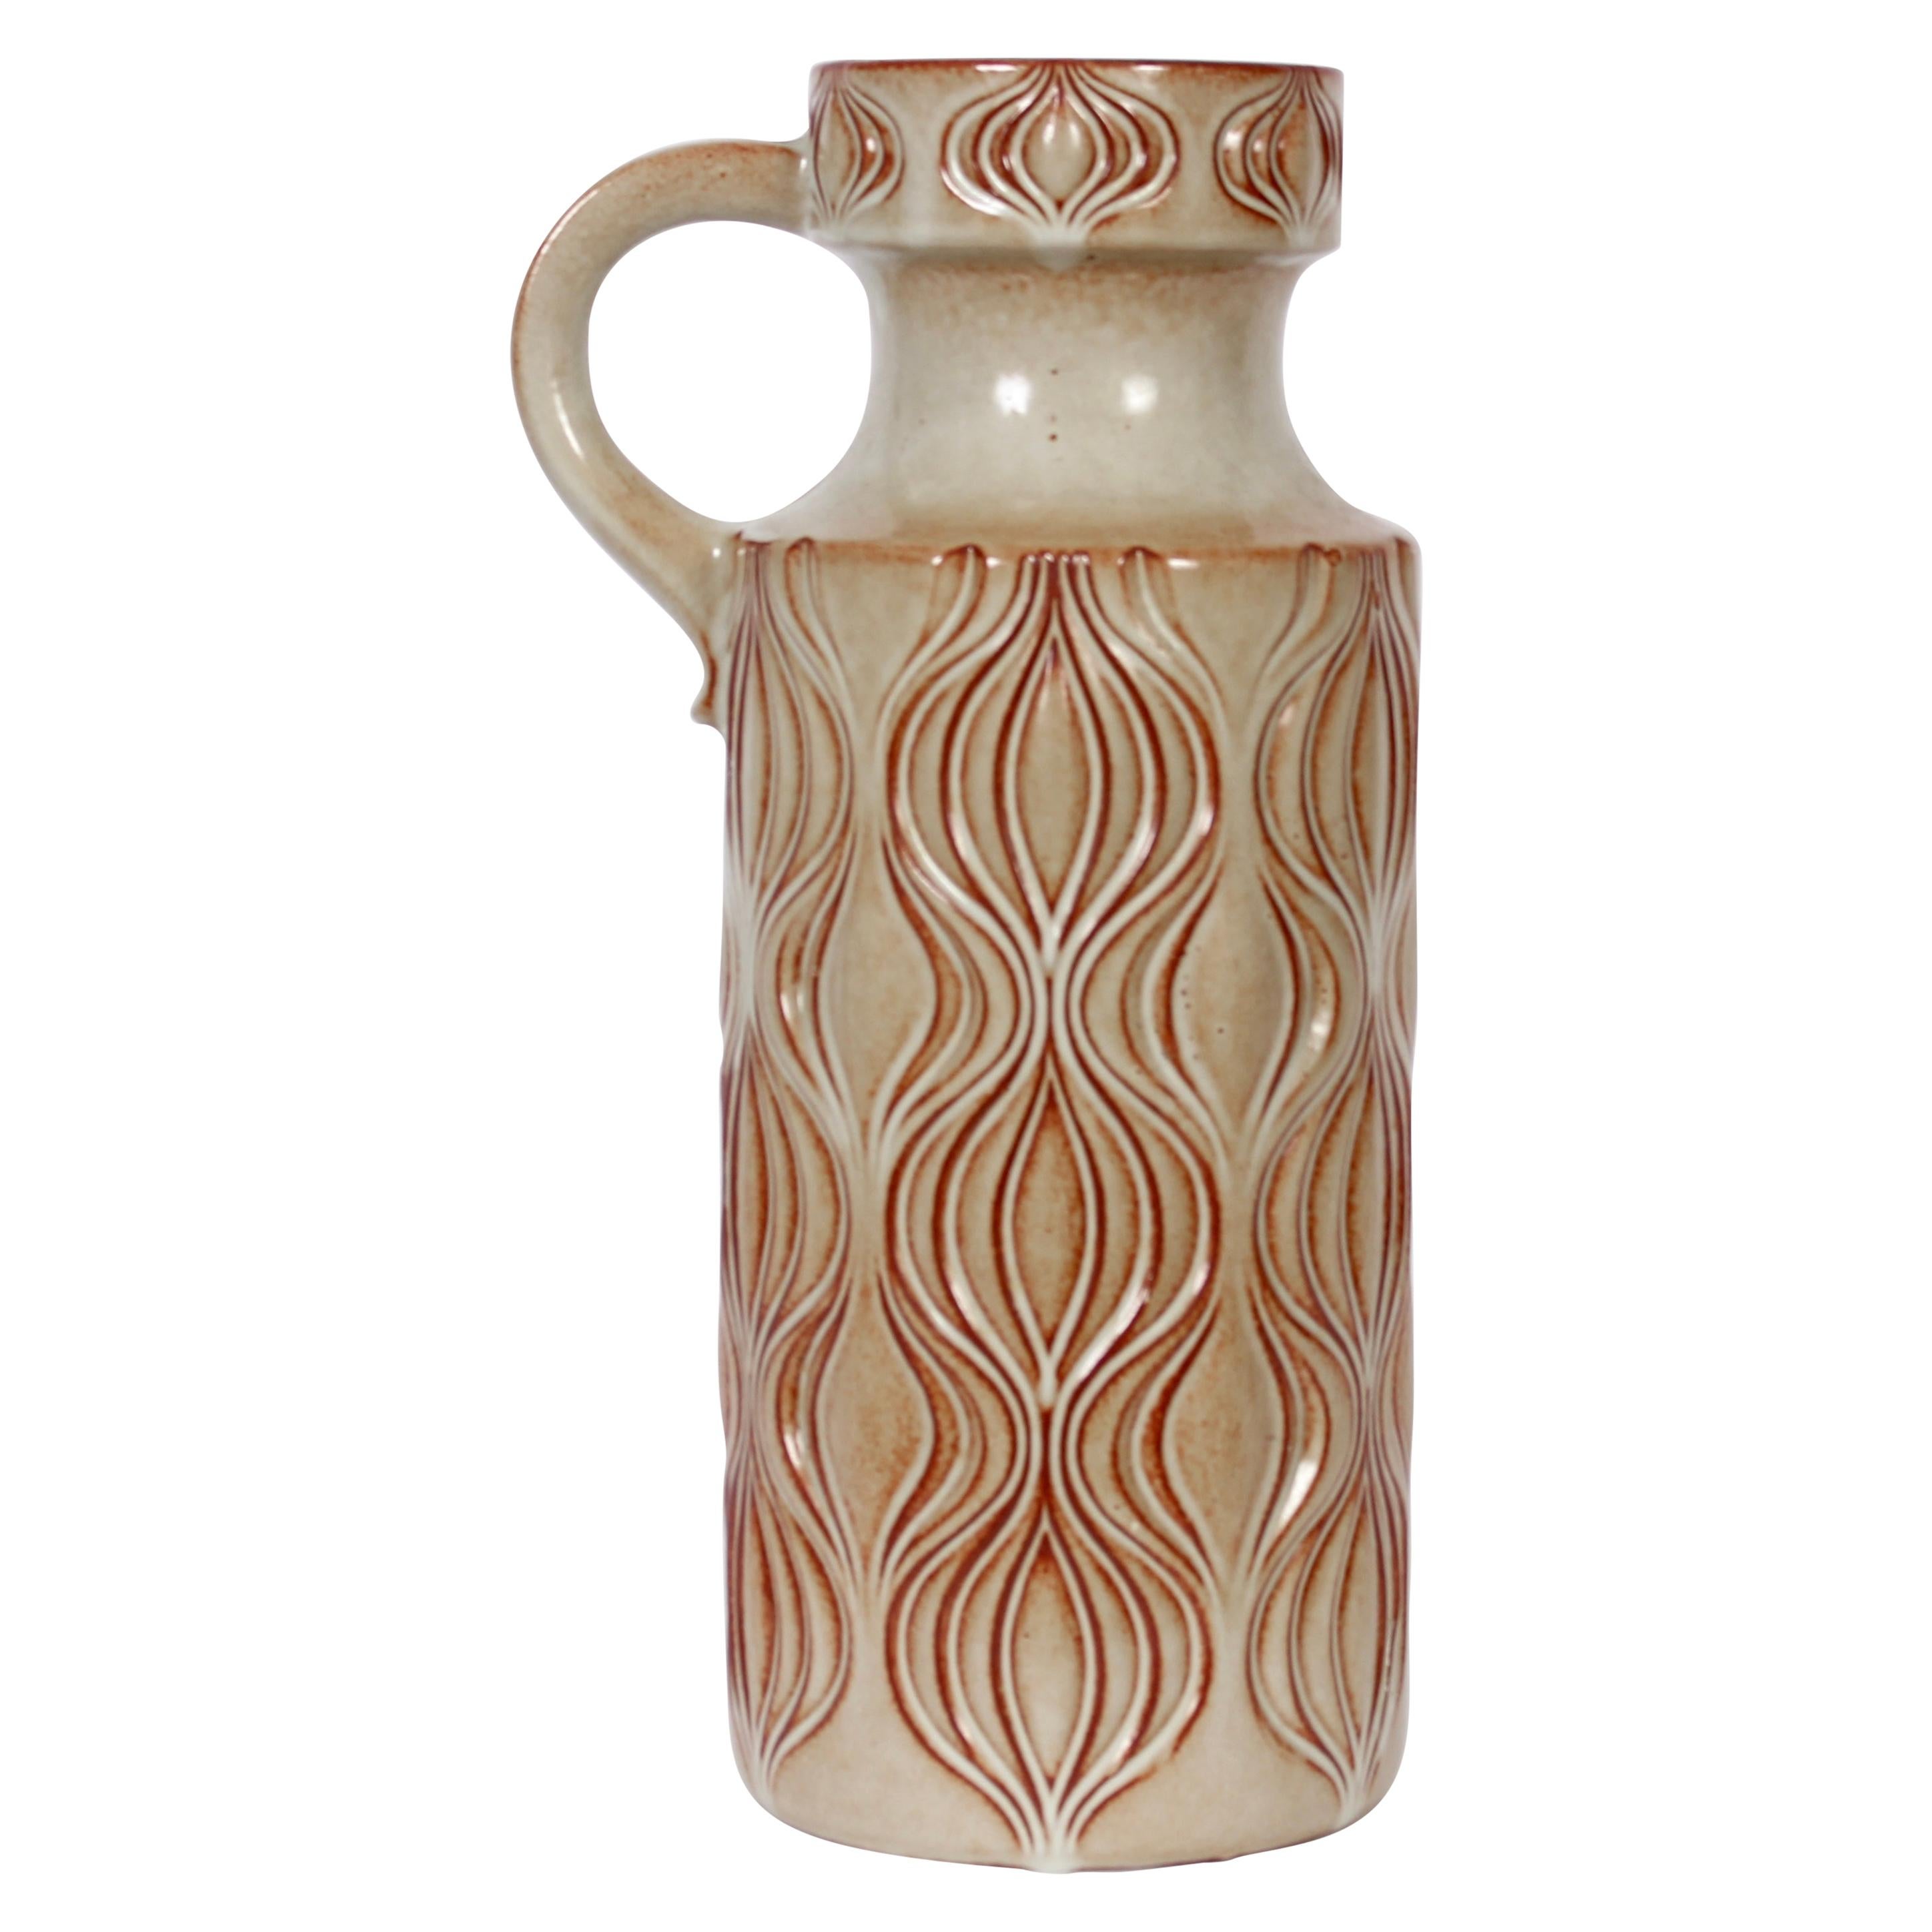 A. Seide for Scheurich "Fat Lava" Incised Ceramic Two-Tone Jug Vase